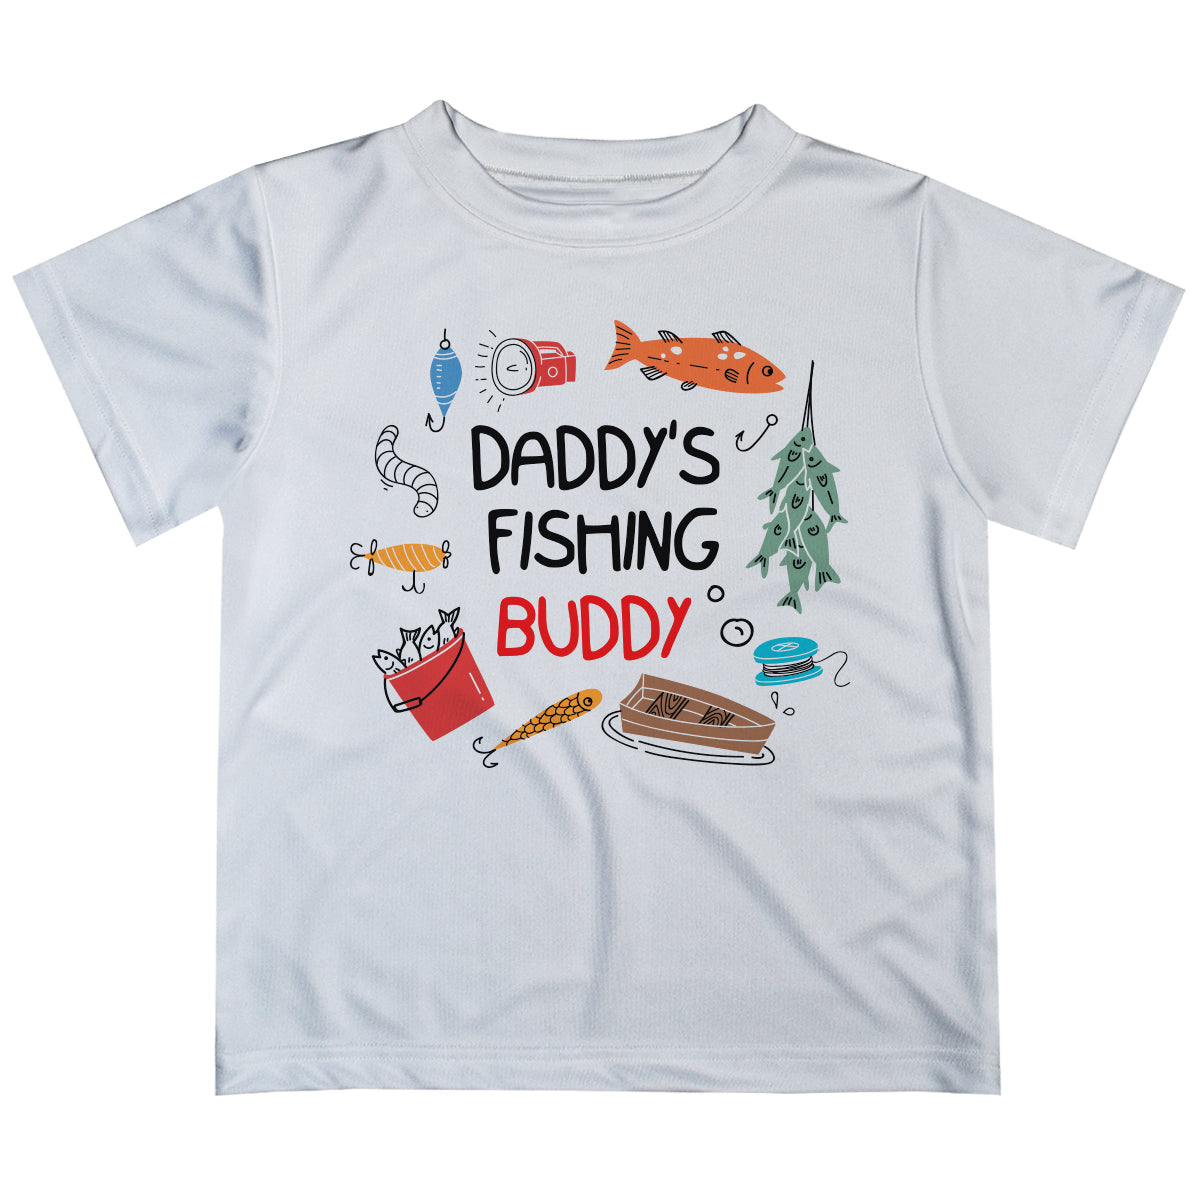 Daddys Fishing Buddy White Short Sleeve Tee Shirt - Wimziy&Co.